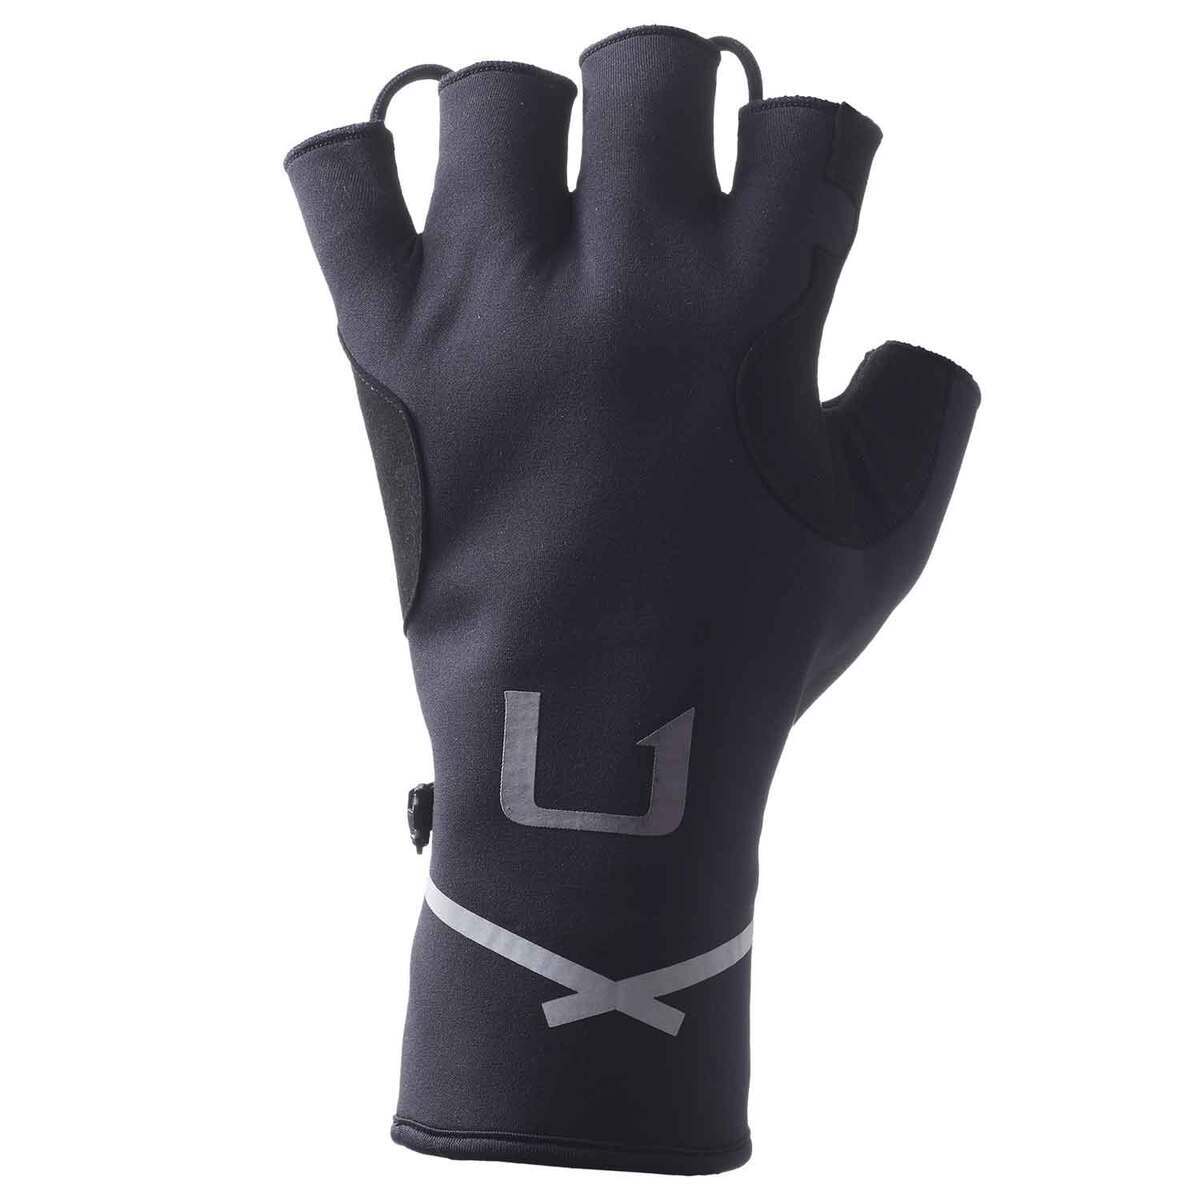 Huk Power Stretch Fingerless Gloves H3000399 L/xl, Black